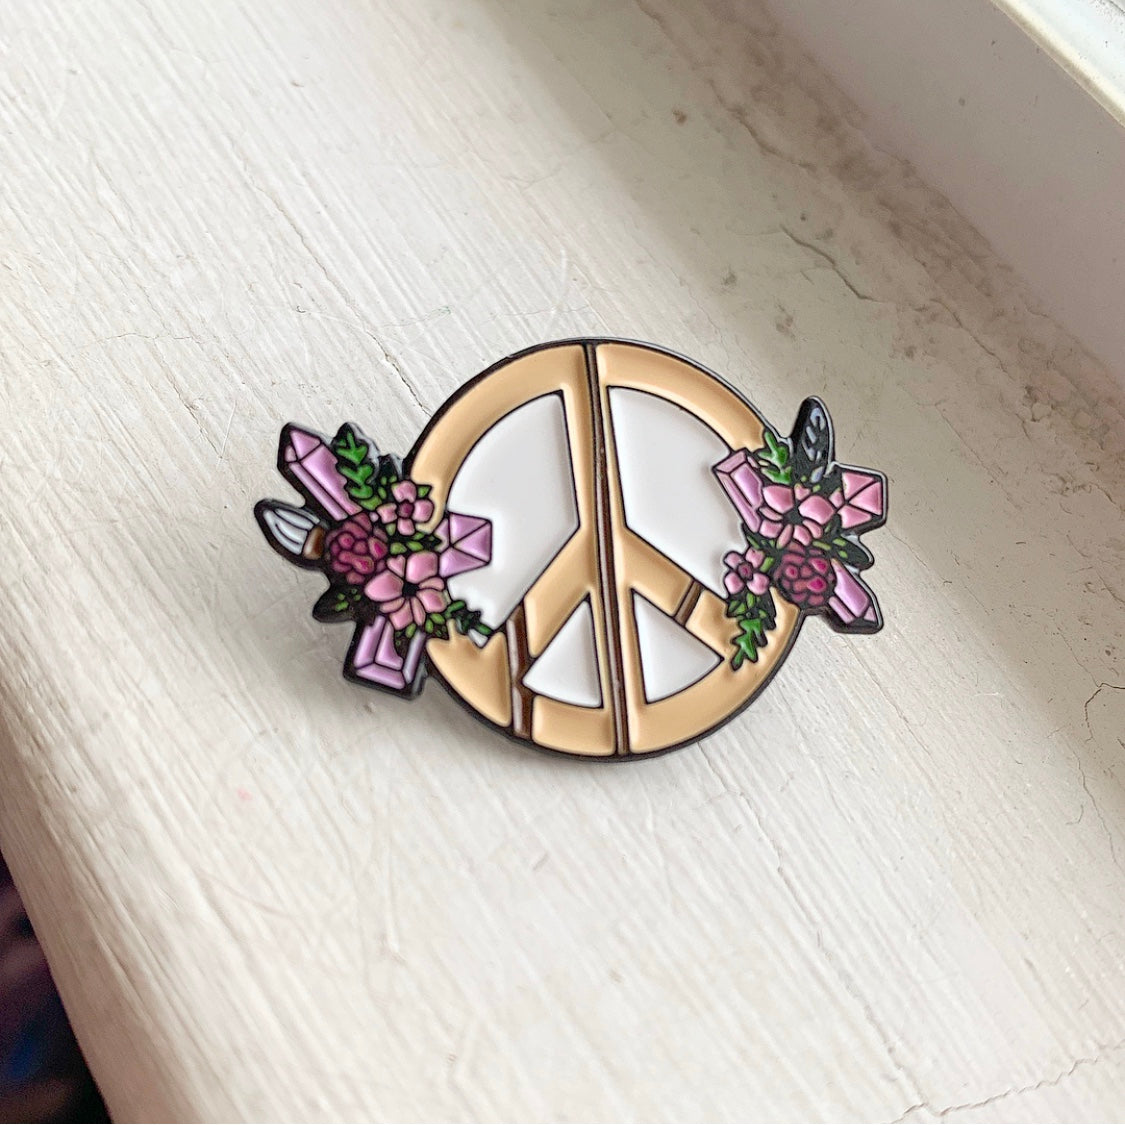 Peaceful Pieces Enamel Pin